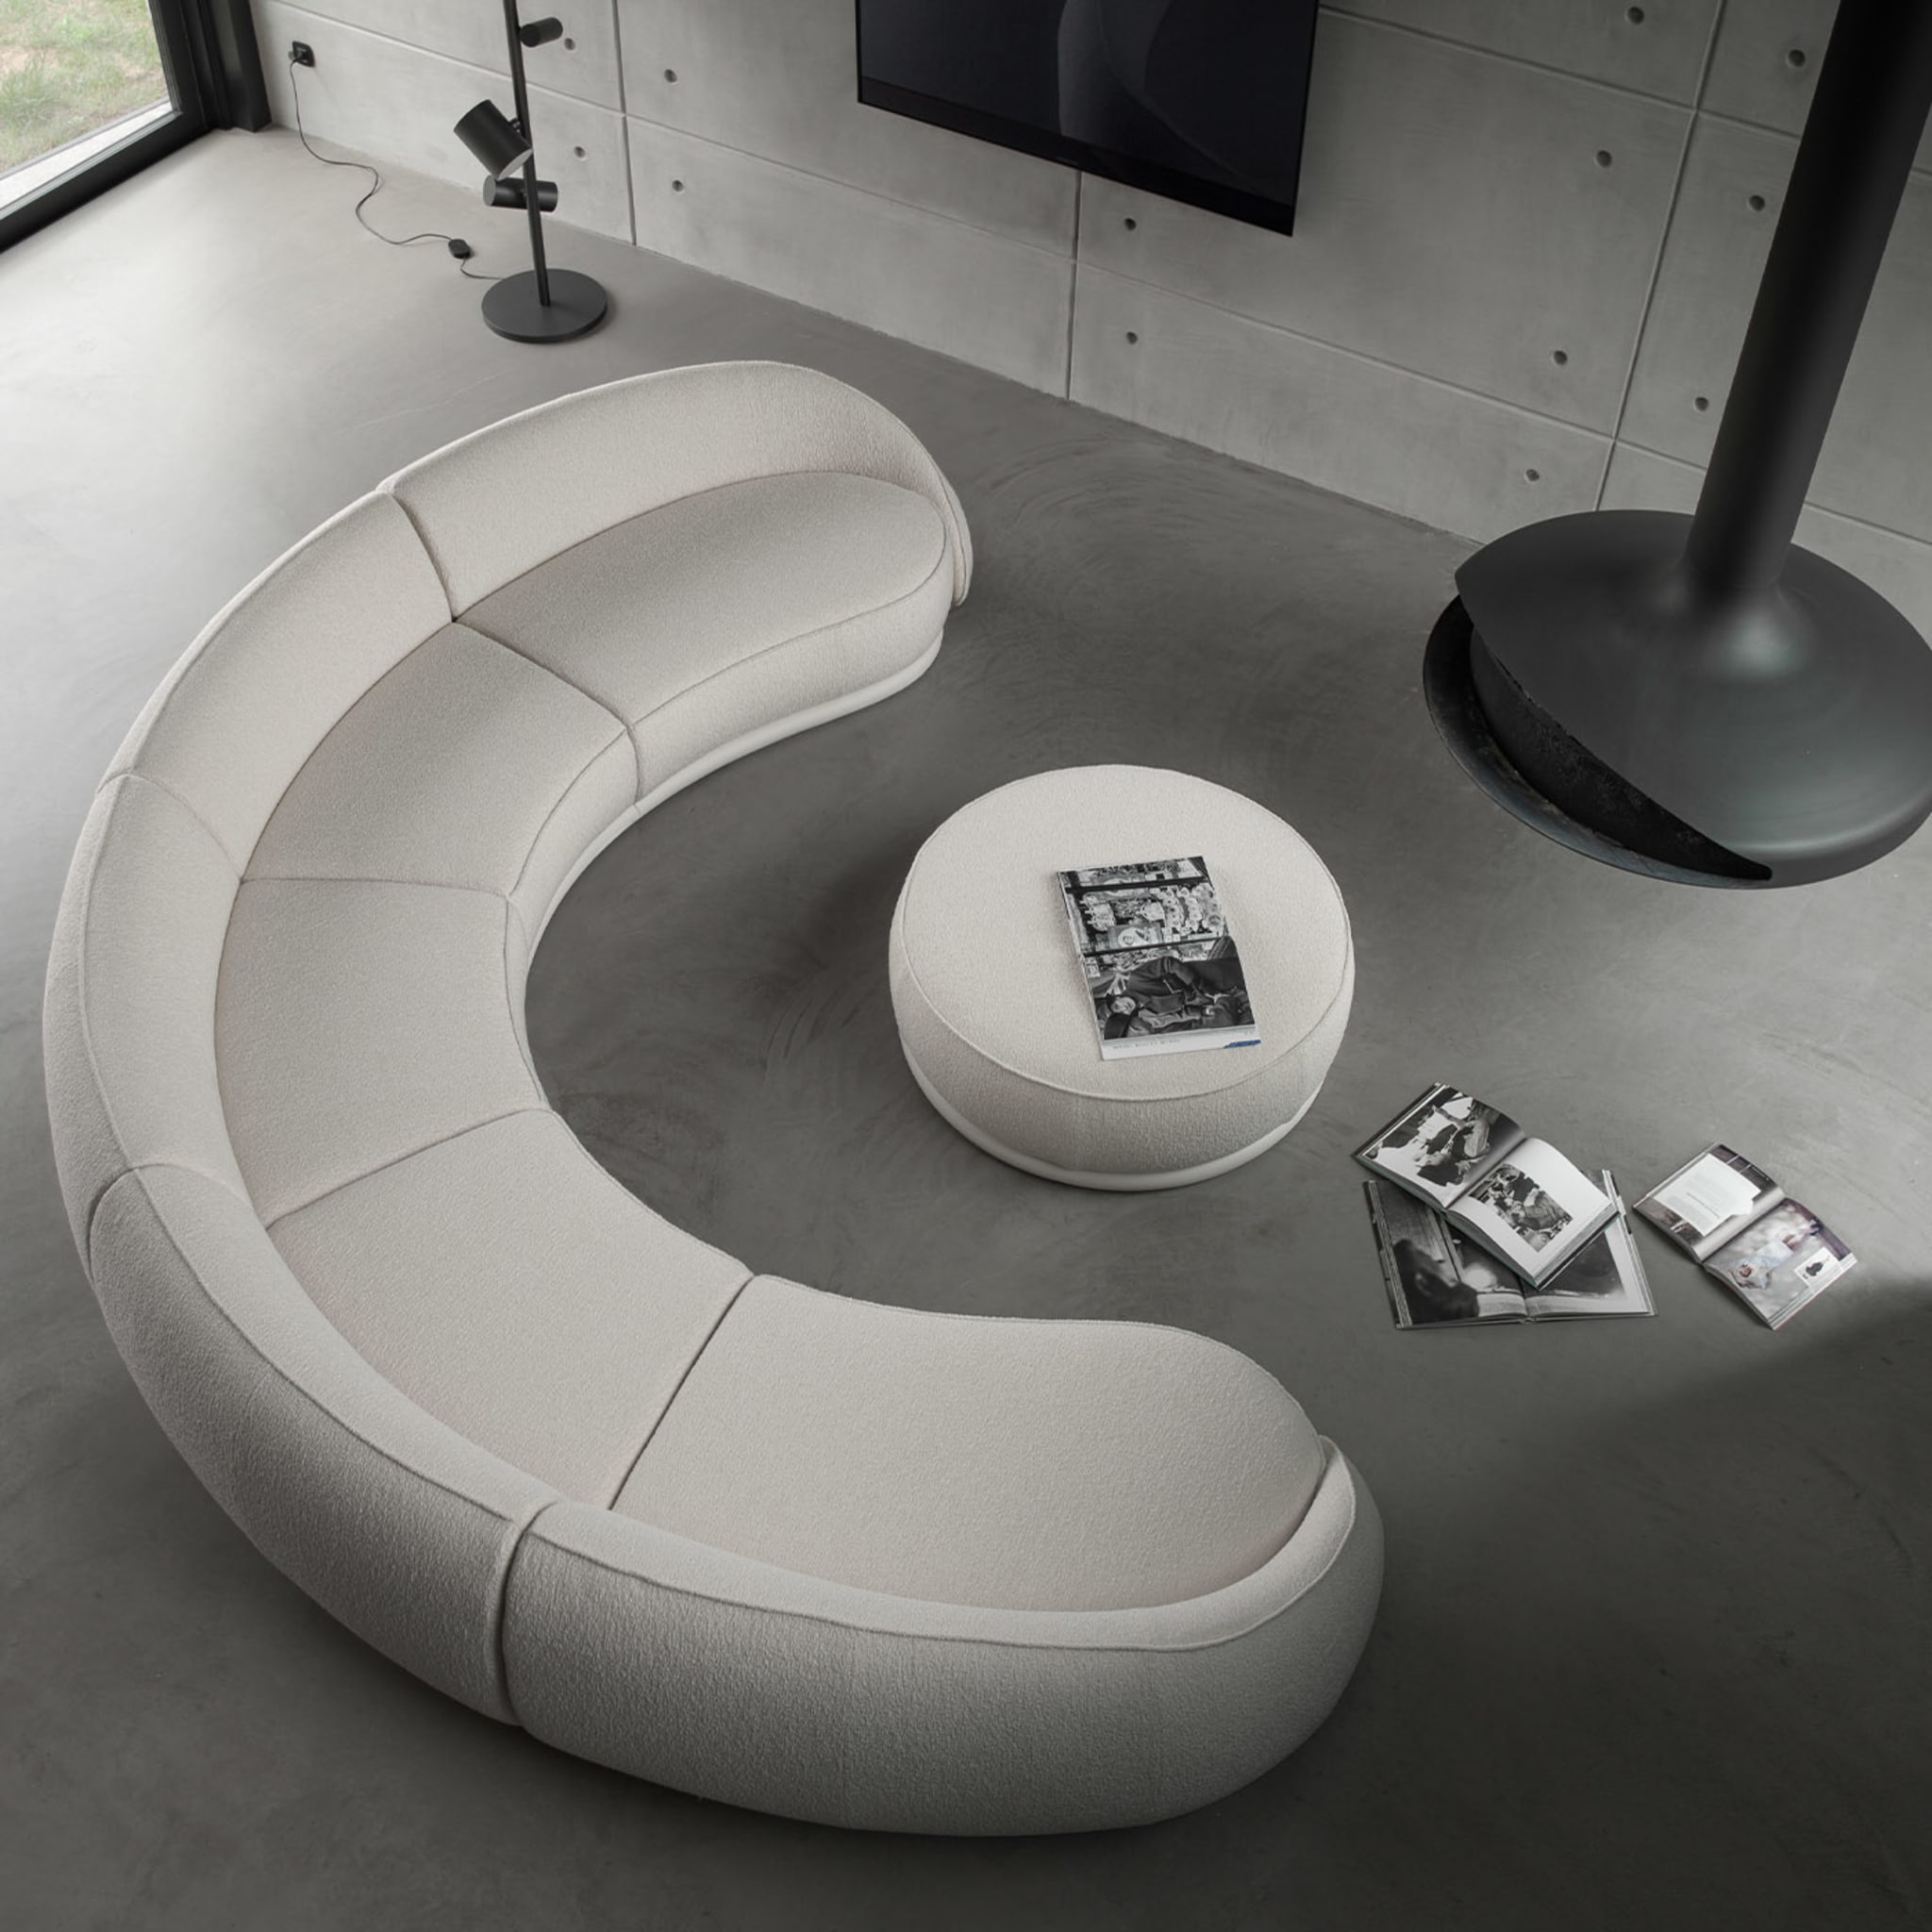 Abbracci 3-Module White Sofa by Lorenza Bozzoli - Alternative view 4